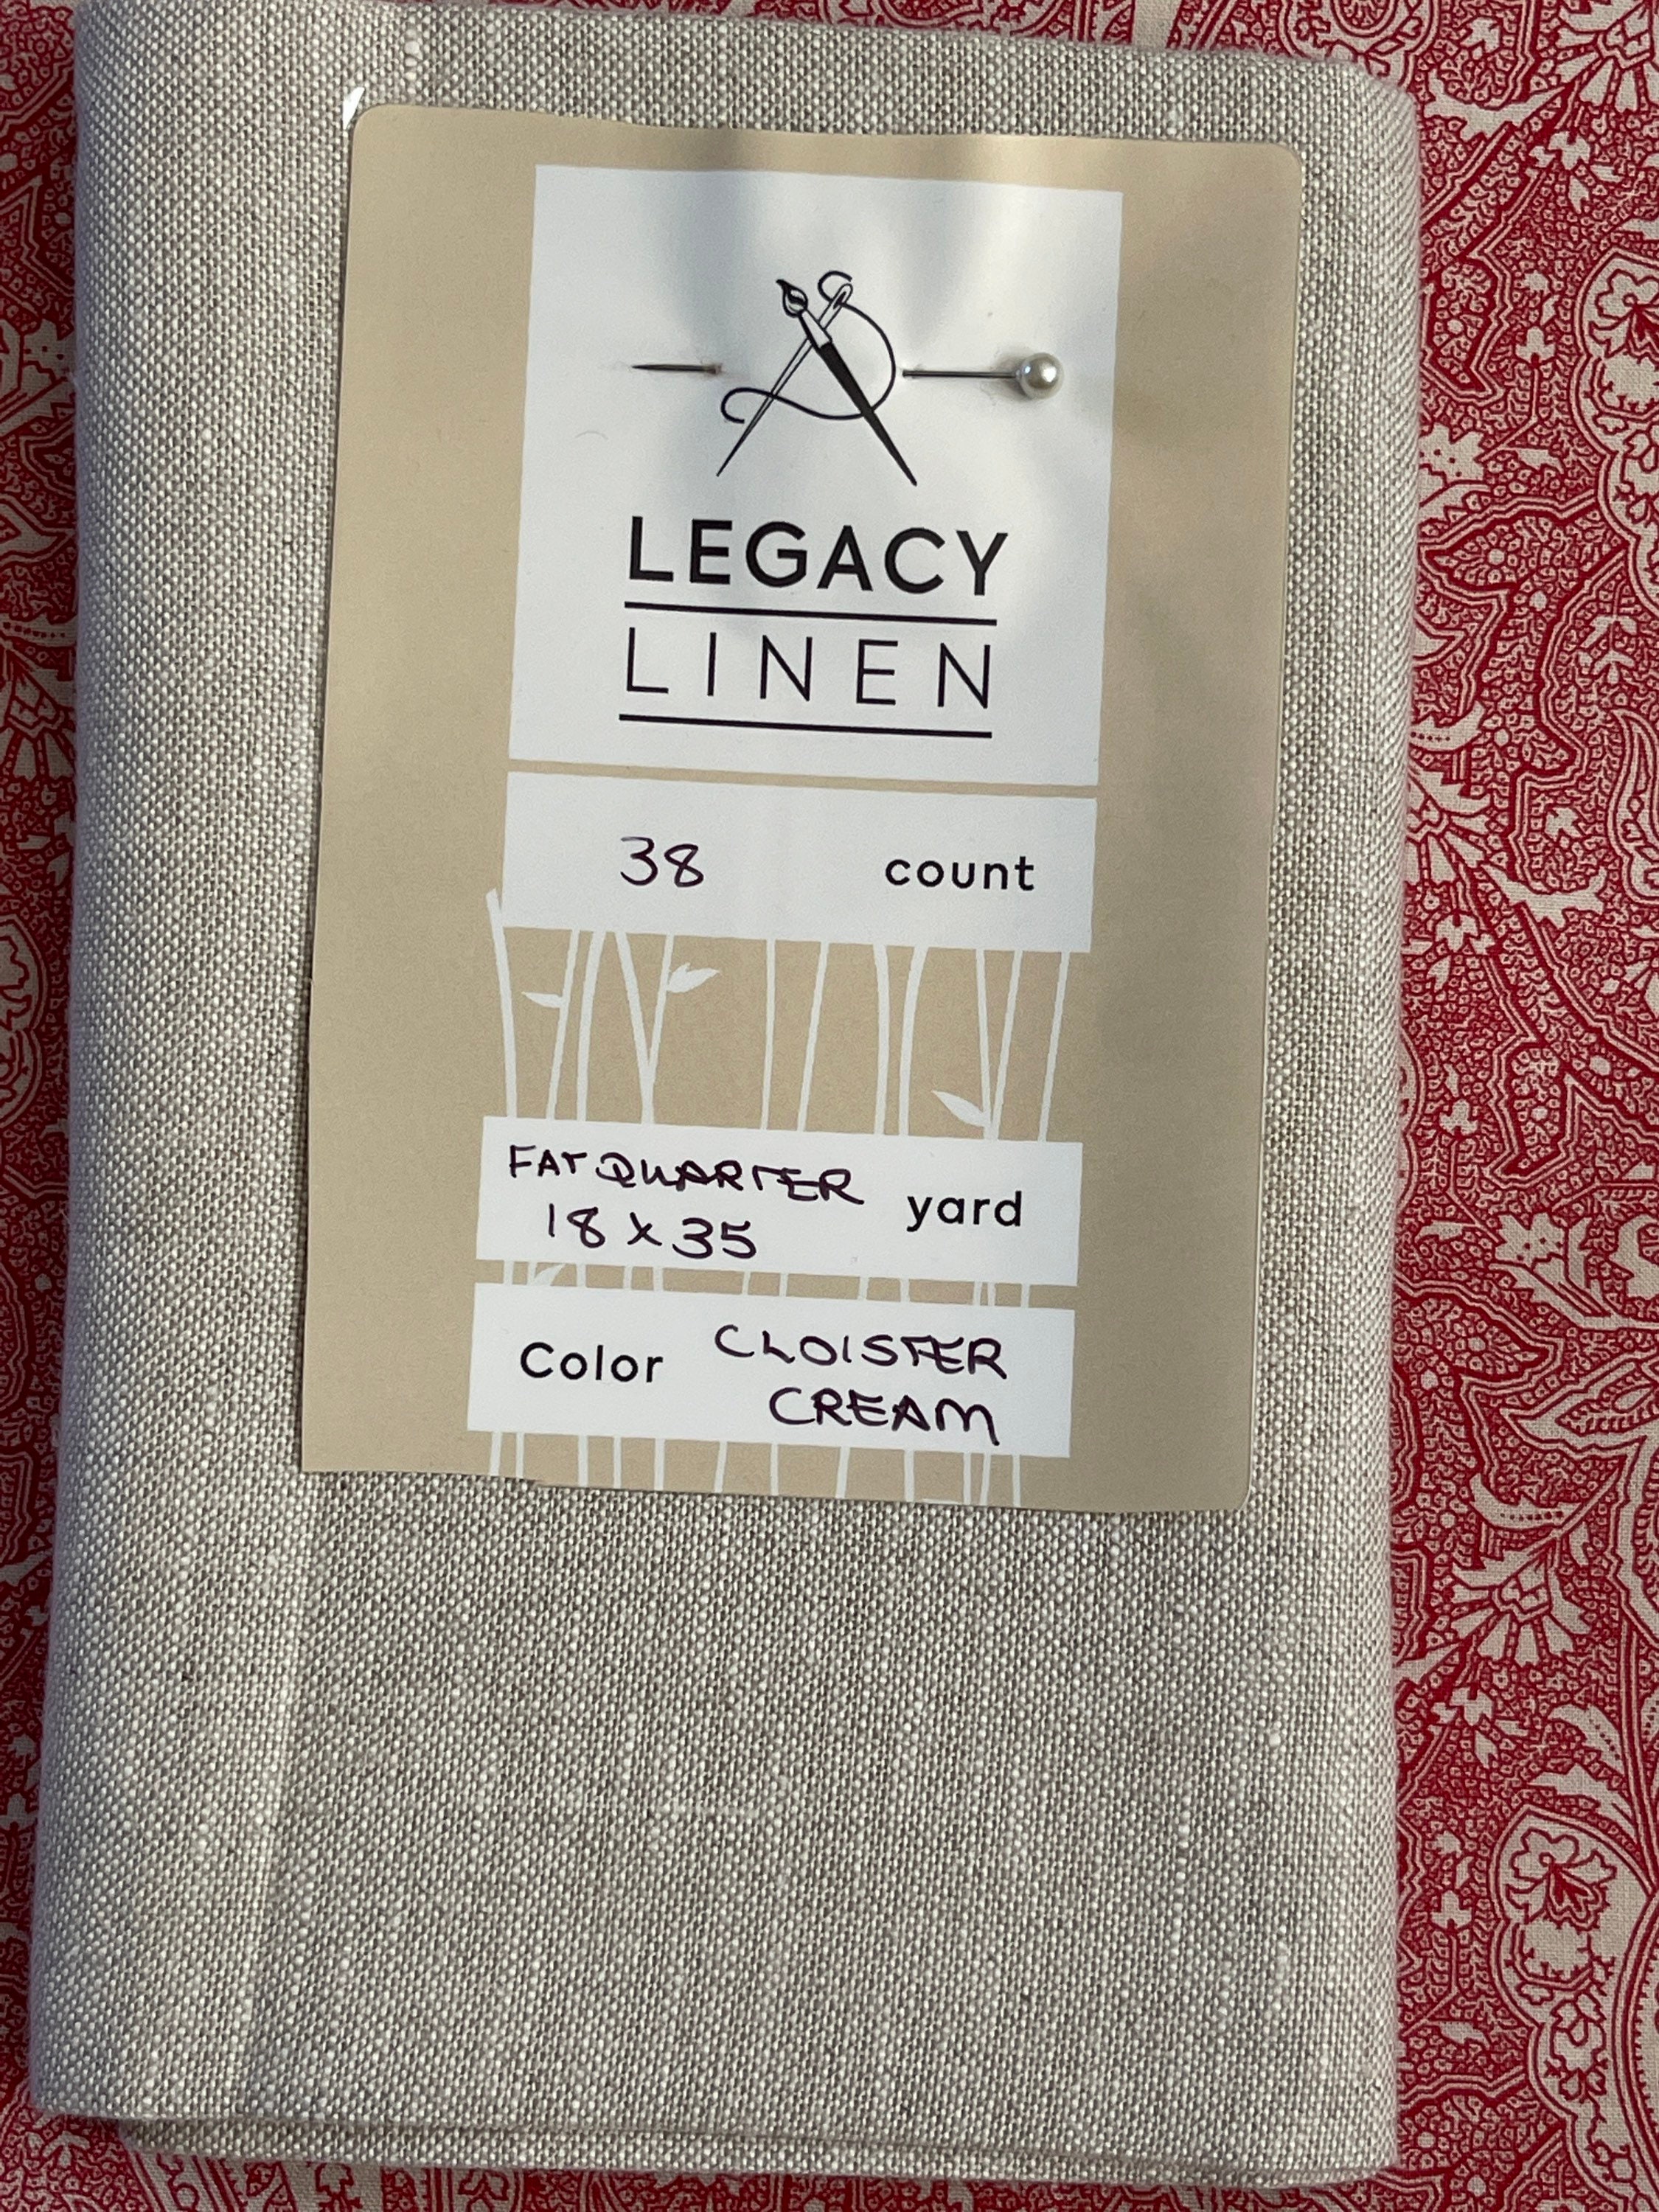 Cloister Cream 38 Count Linen by Legacy Linen Fat Quarter 18x - Etsy